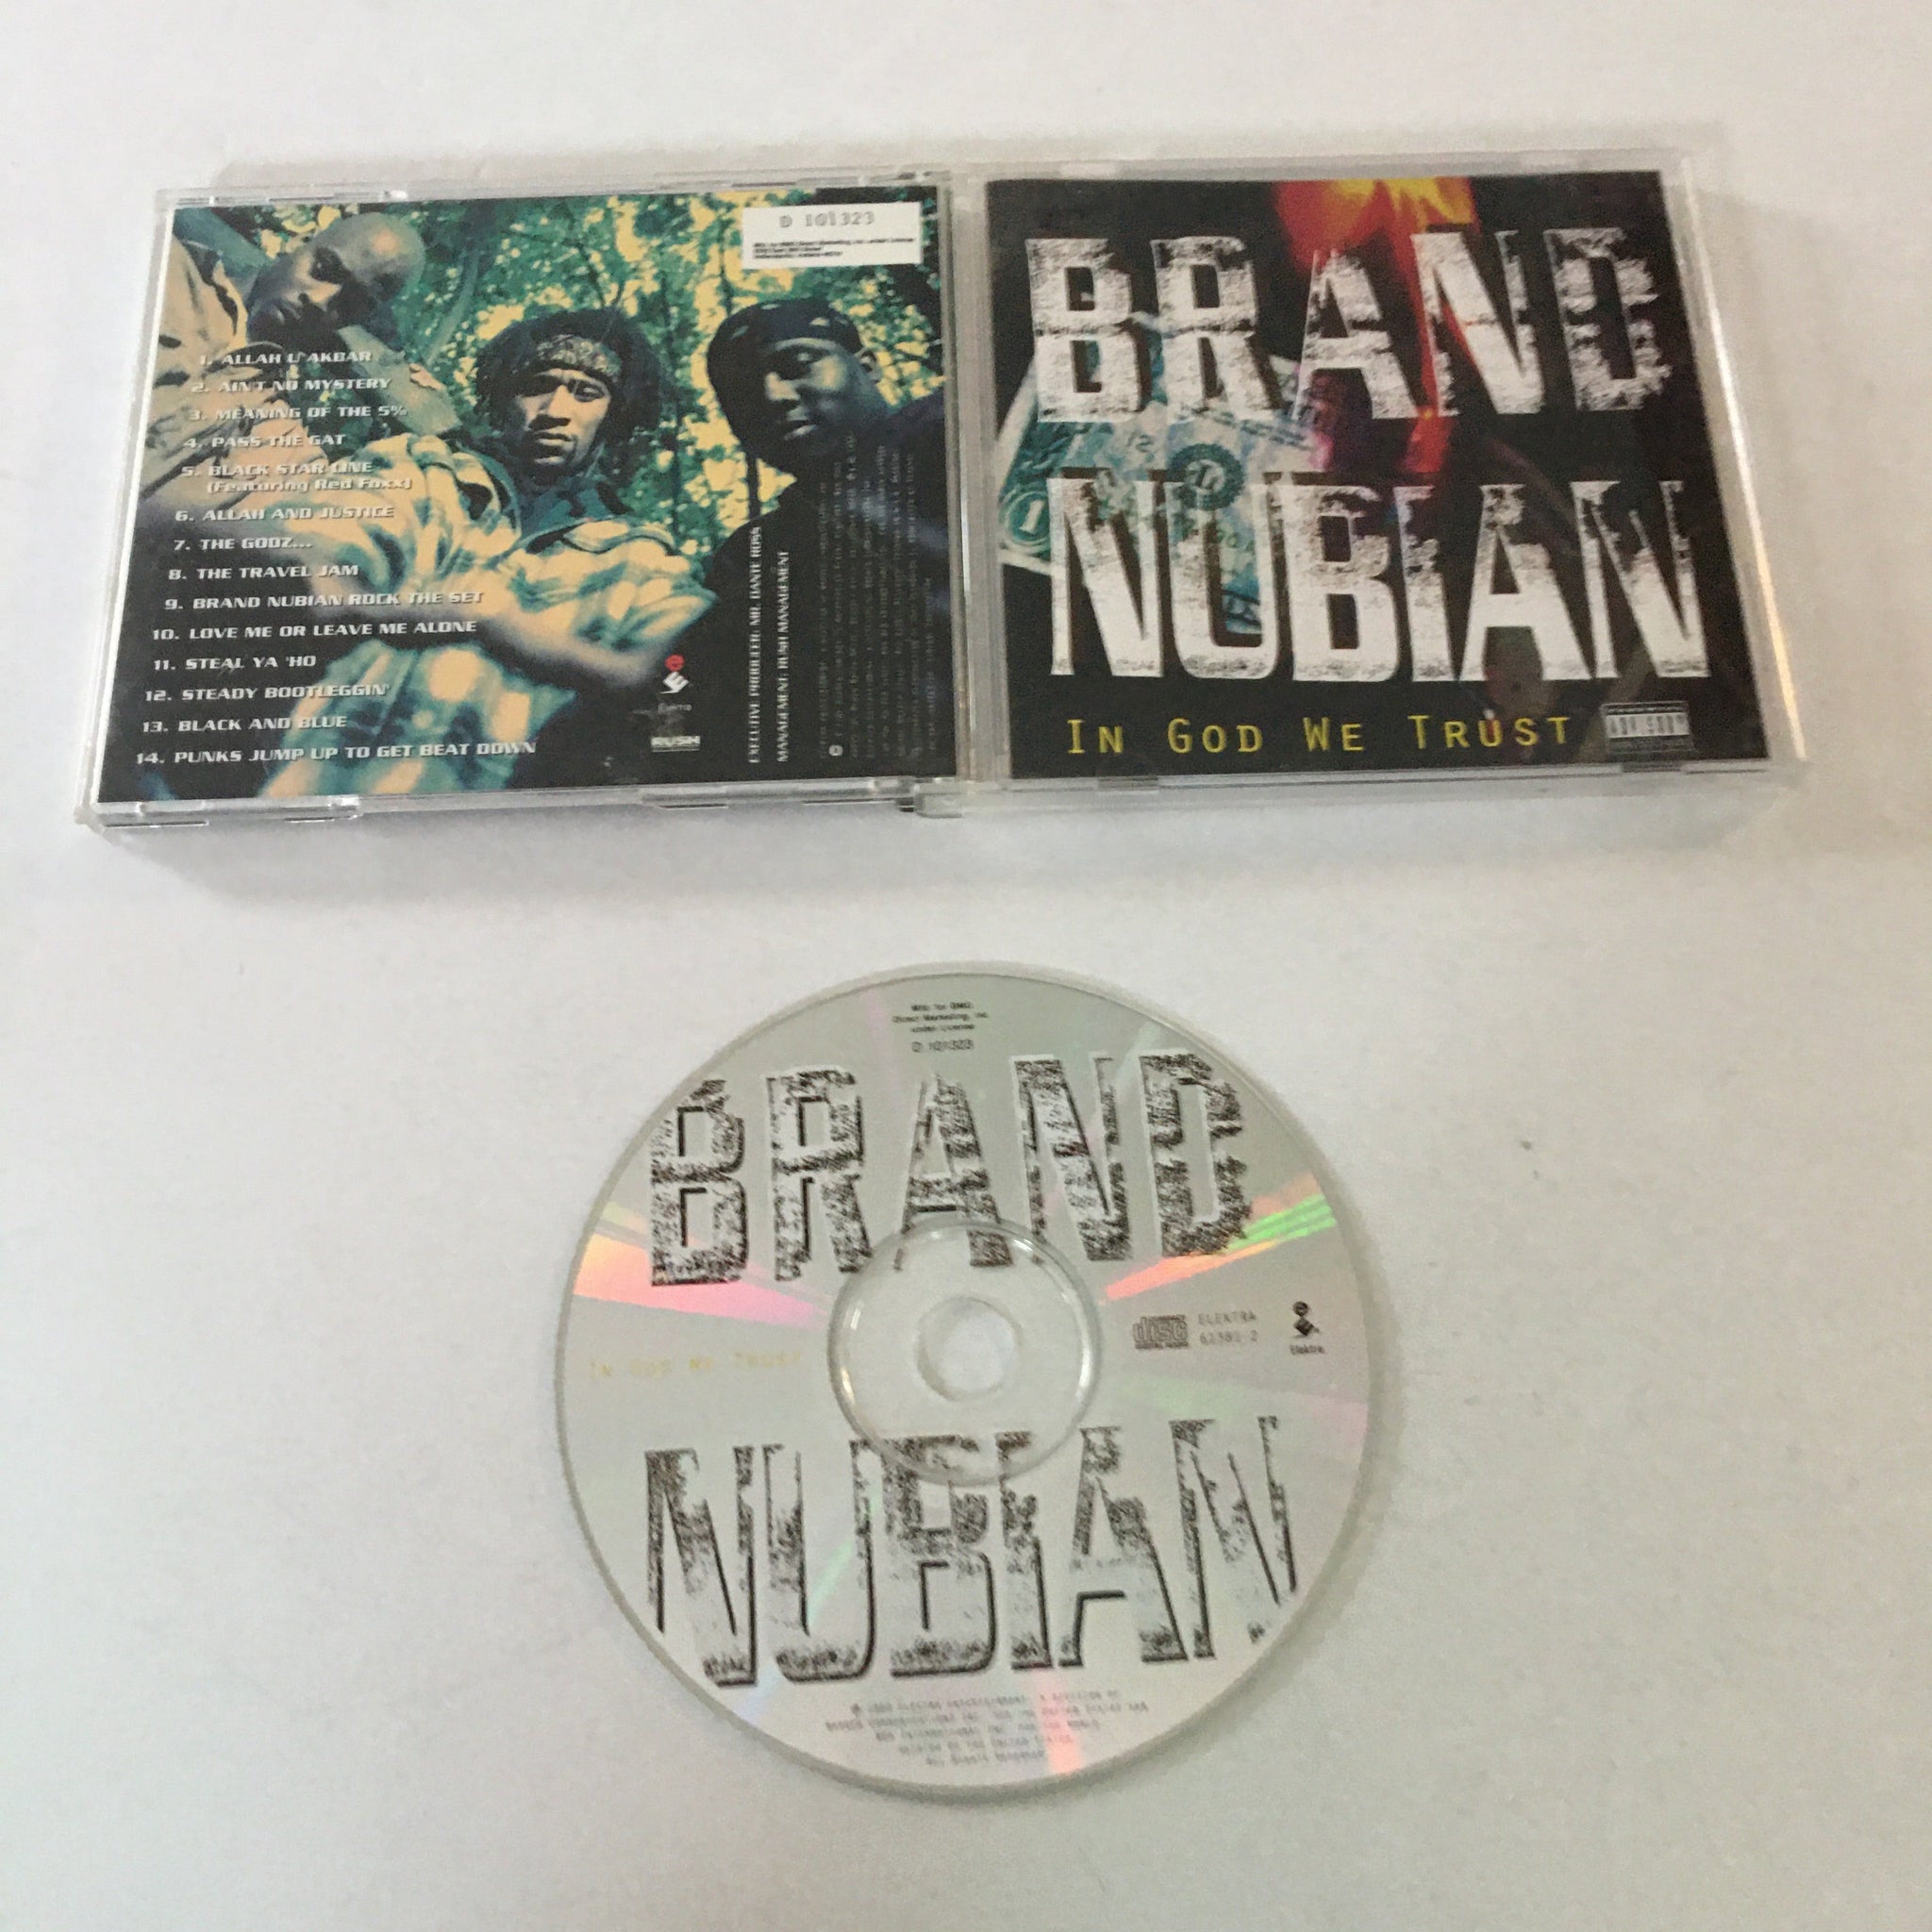 Brand Nubian In God We Trust Used CD VG+\VG+